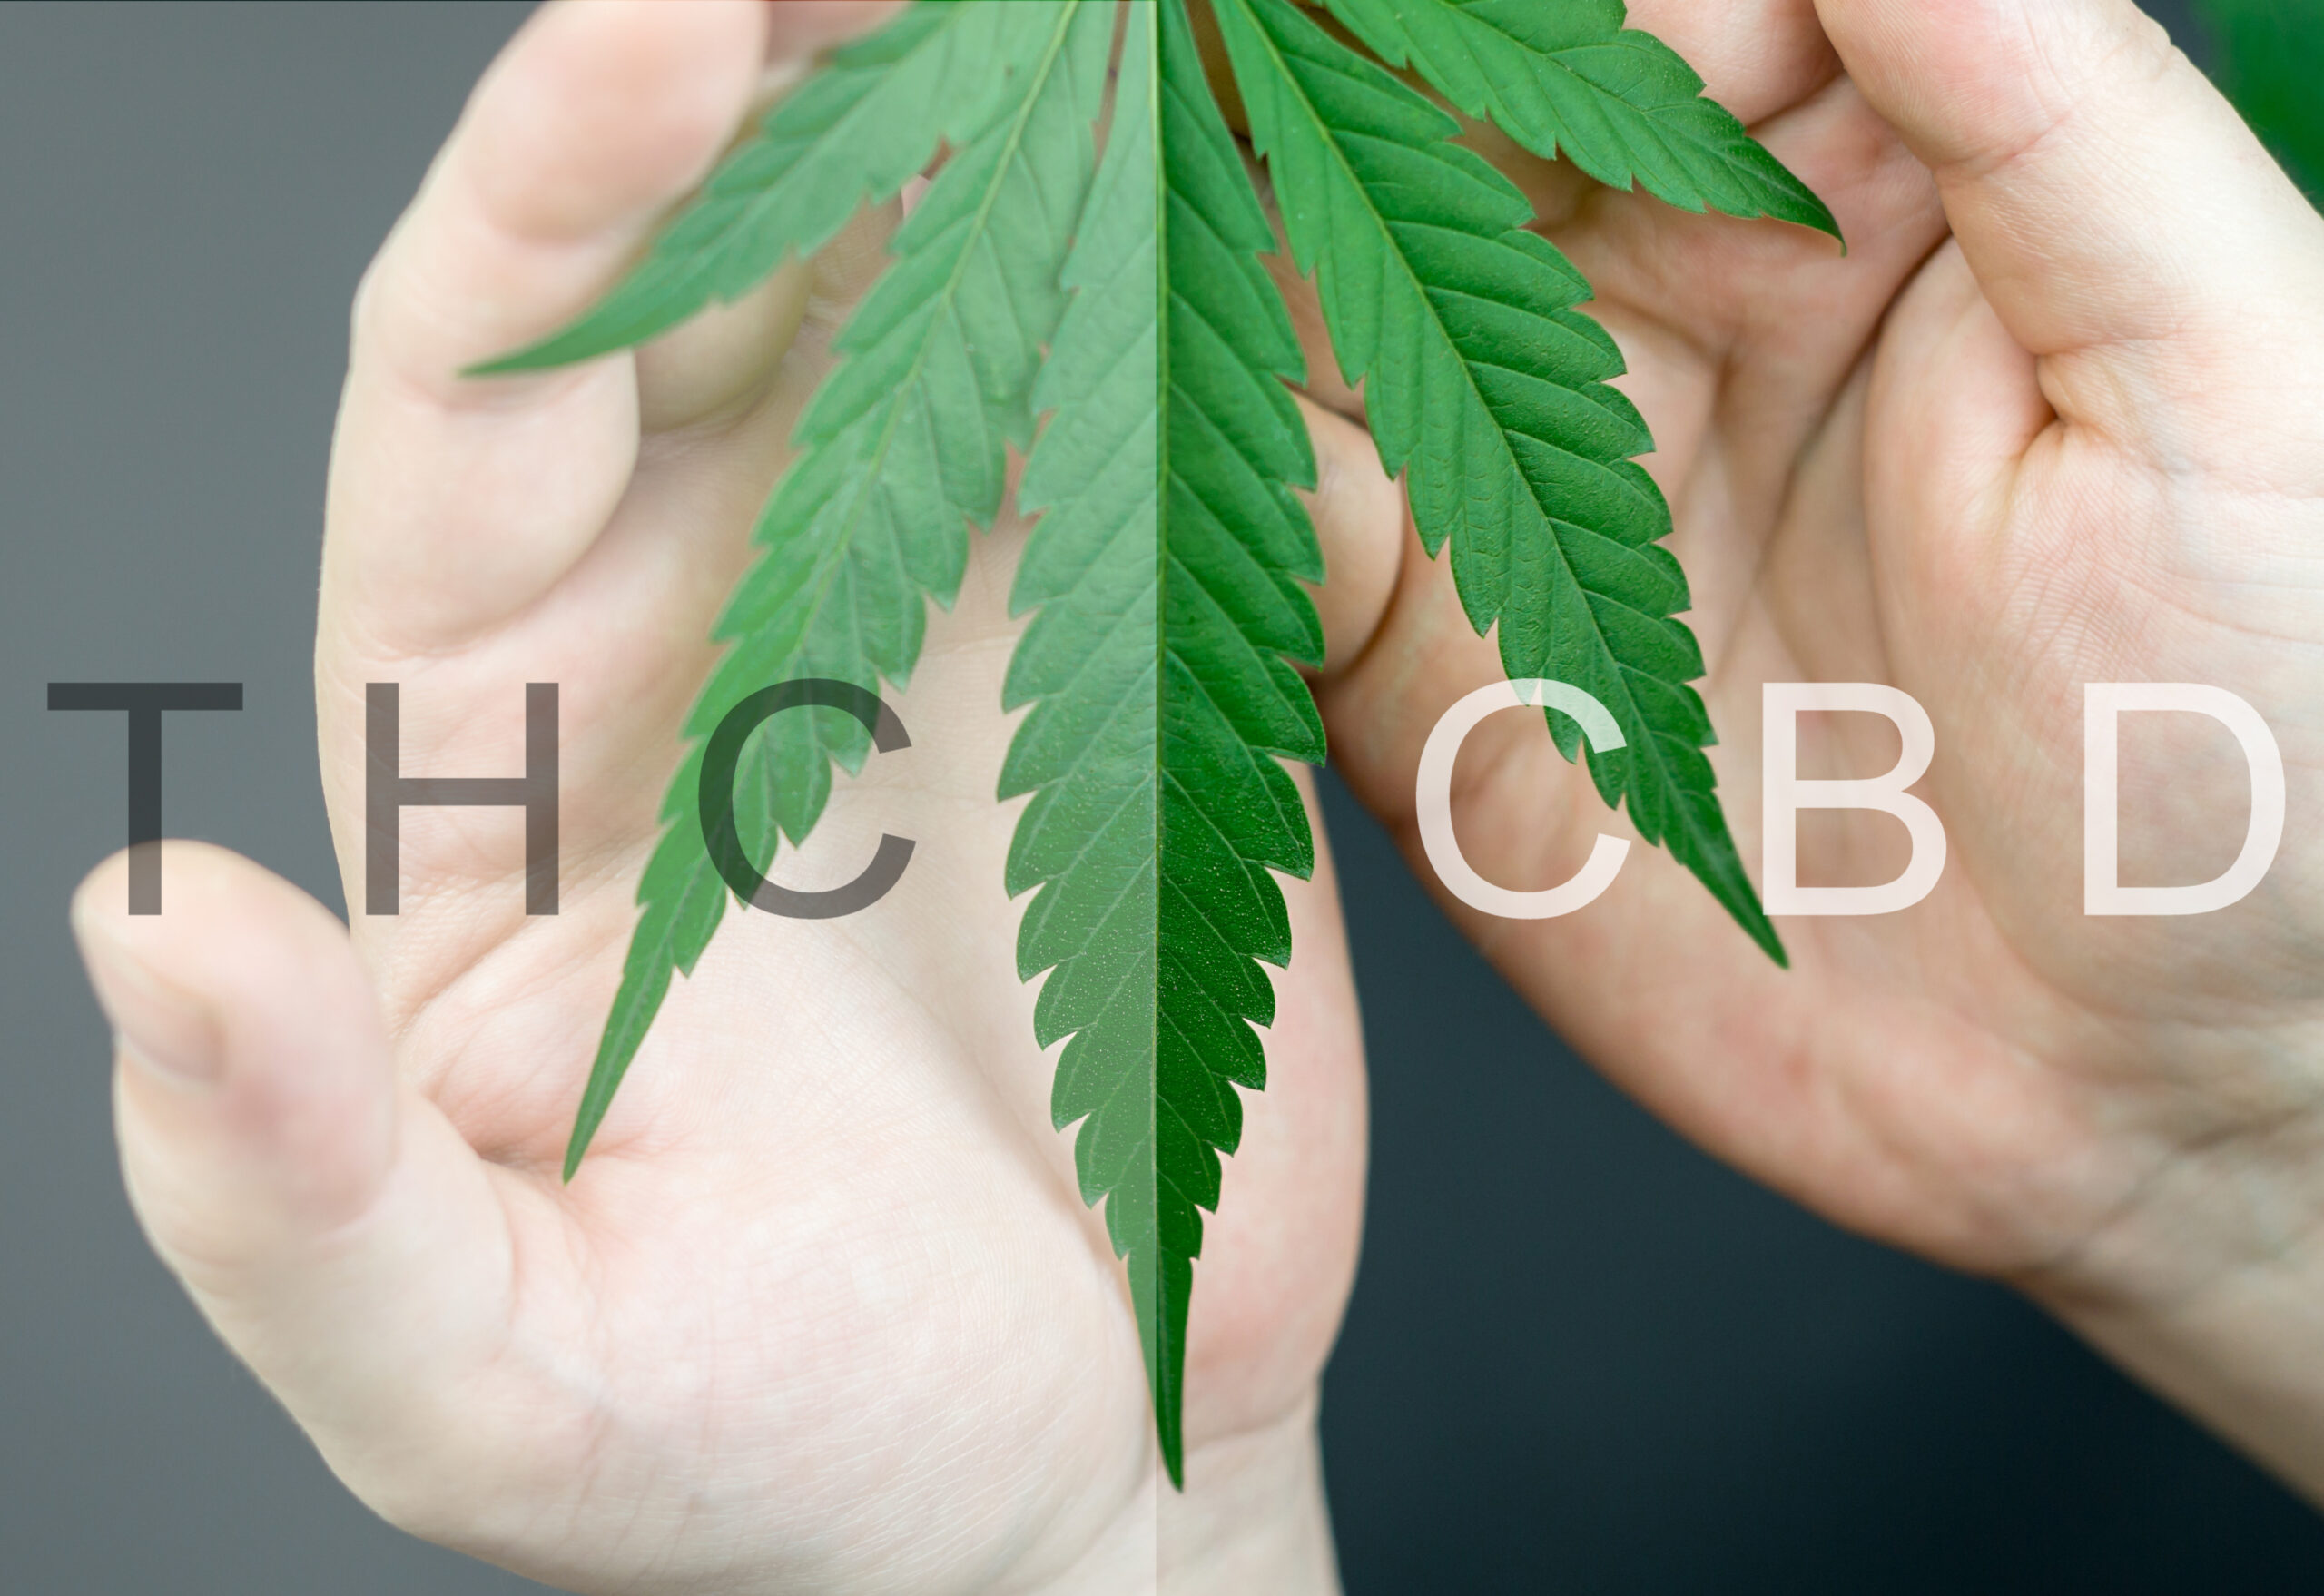 THC vs CBD